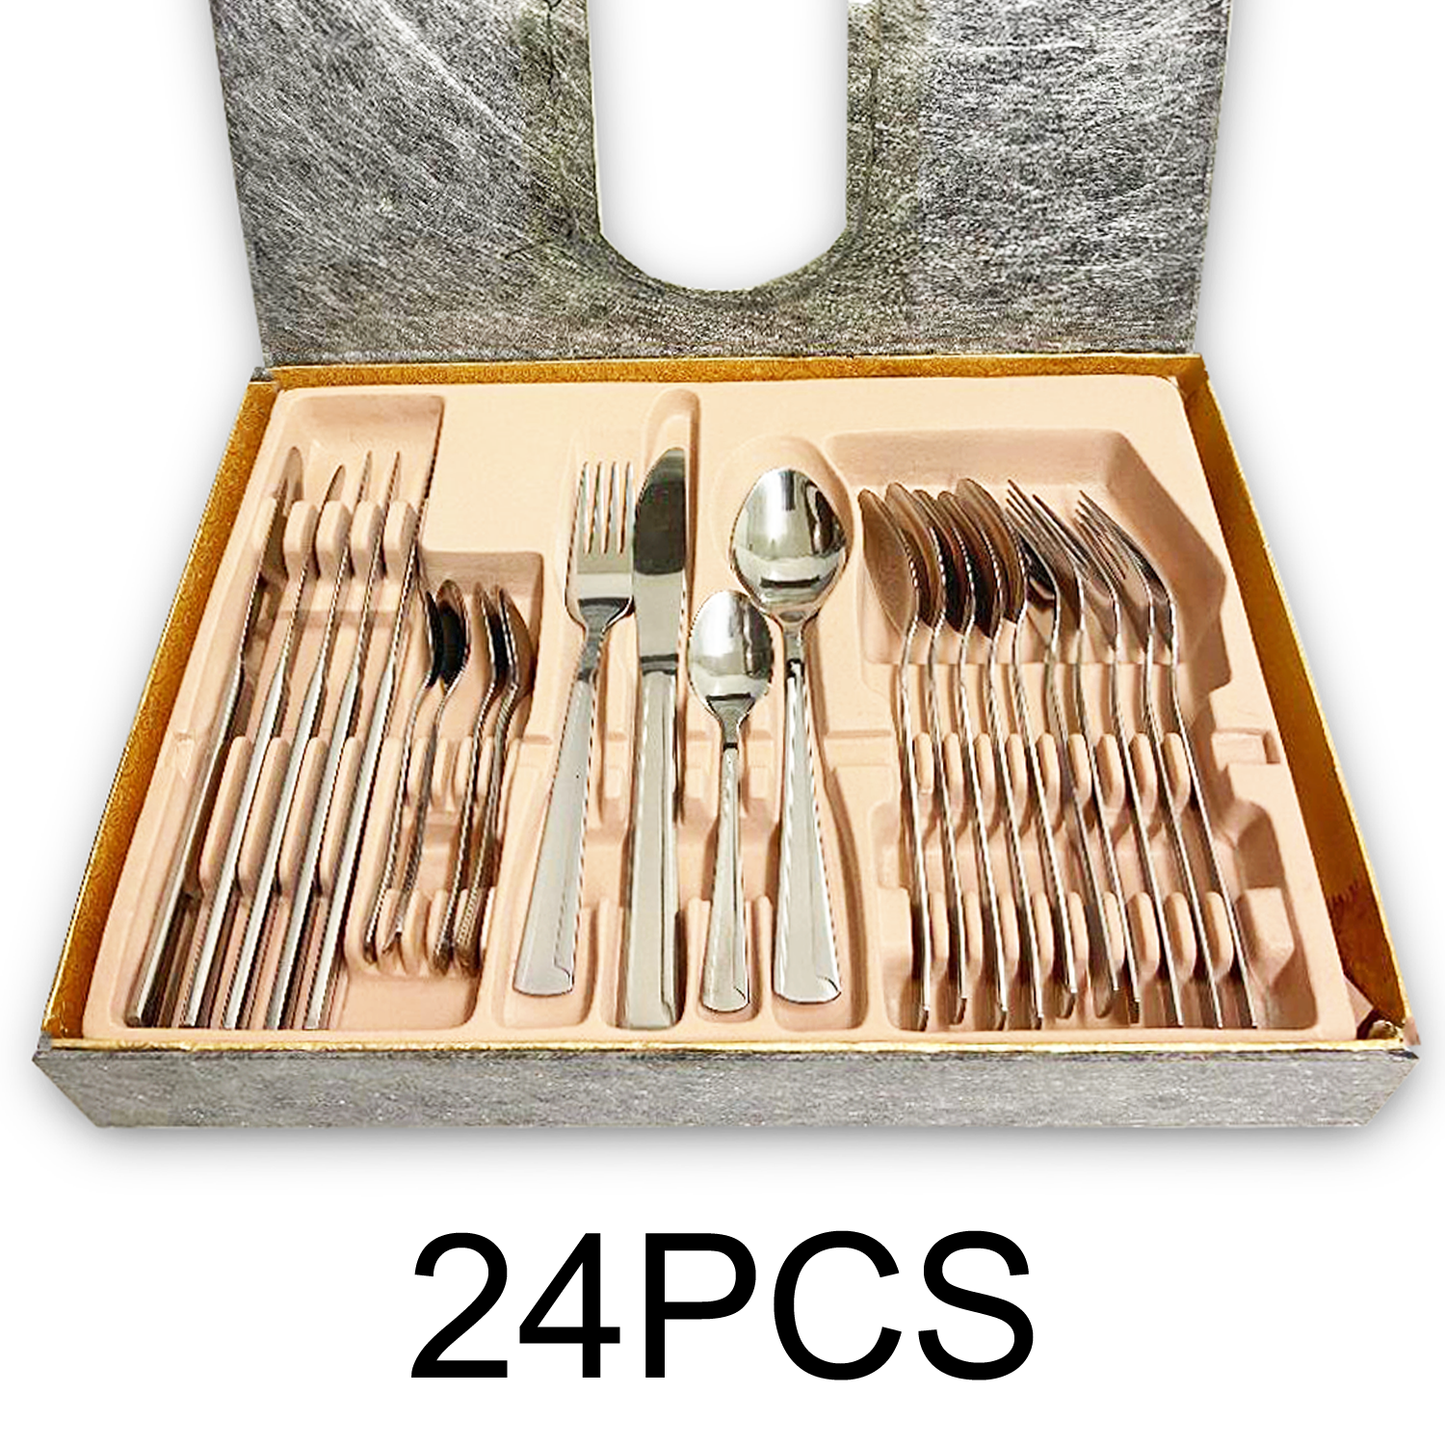 24 PC Stainless Steel Silverware Flatware Cutlery Set